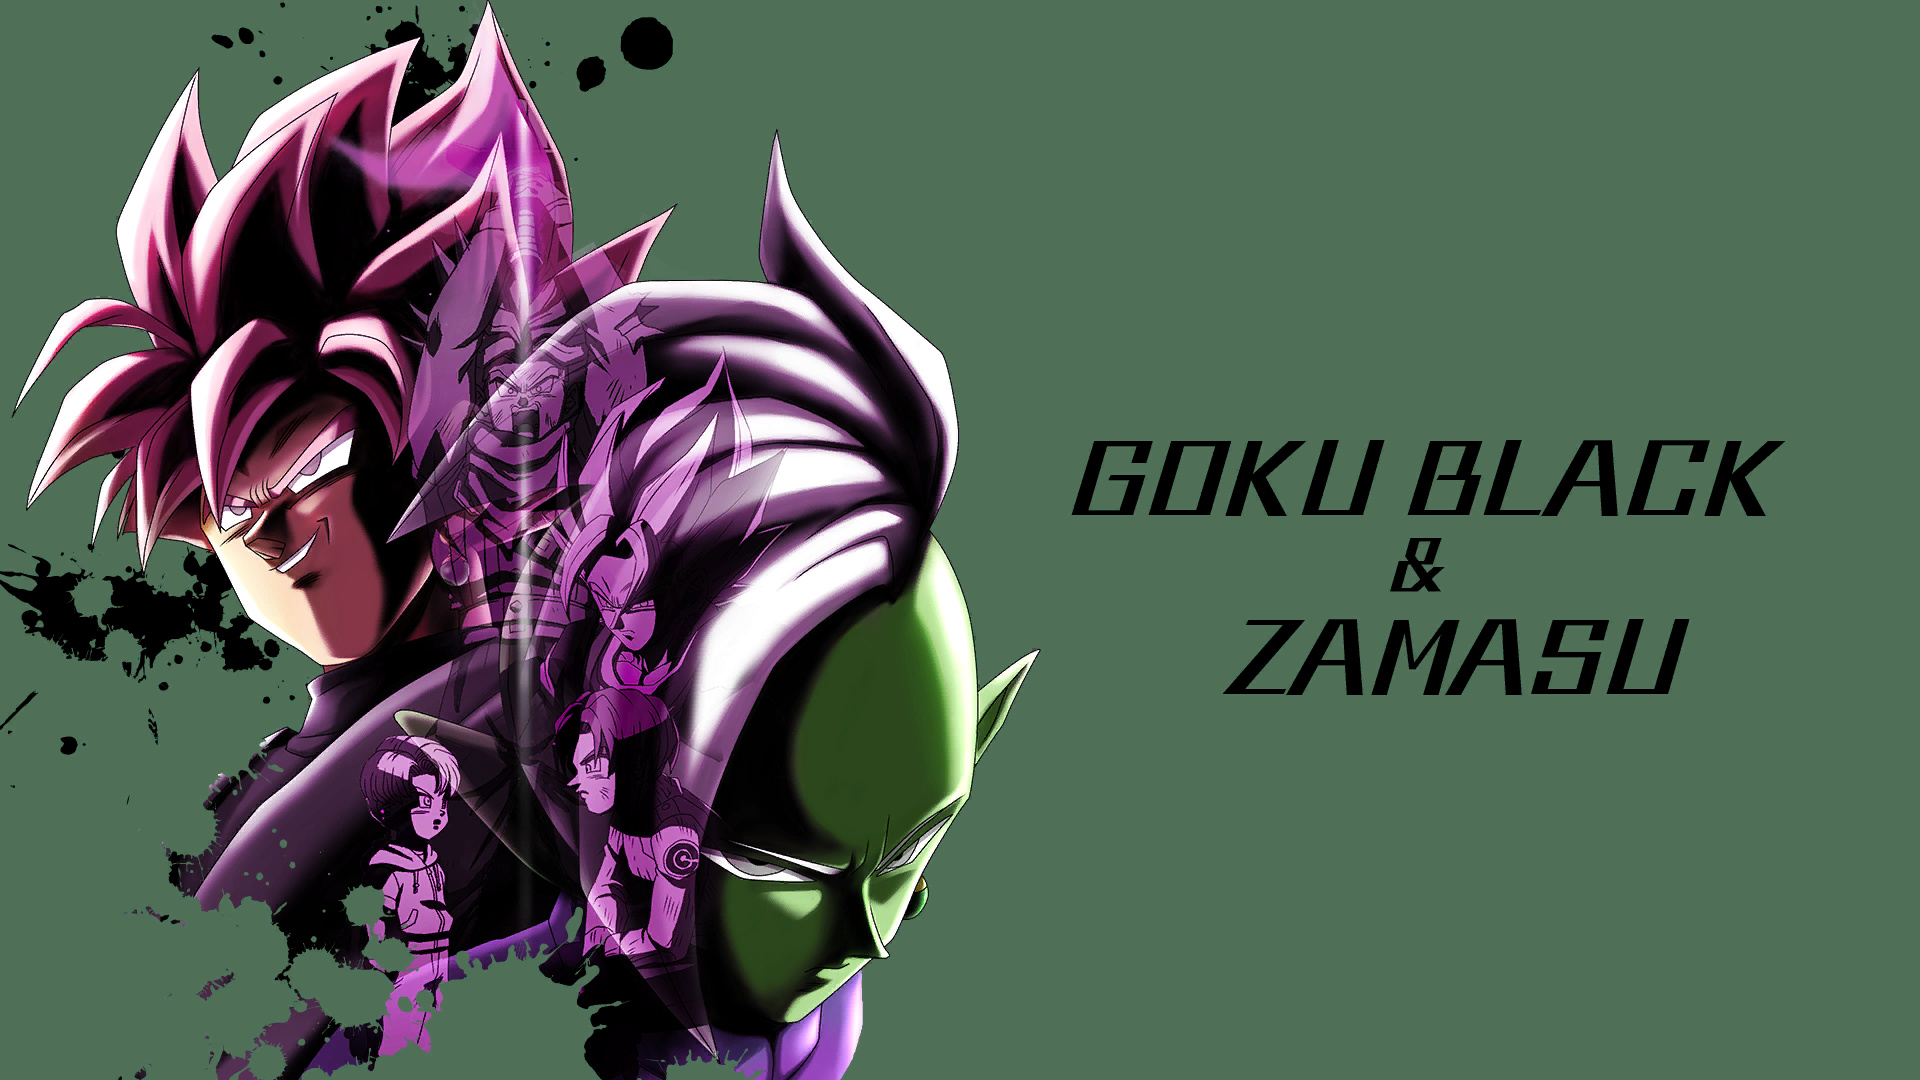 Dragon Ball Dragon Ball Z Dragon Ball Super Dragon Ball Xenoverse 2 Goku Black Zamasu Anime Video Ga 1920x1080